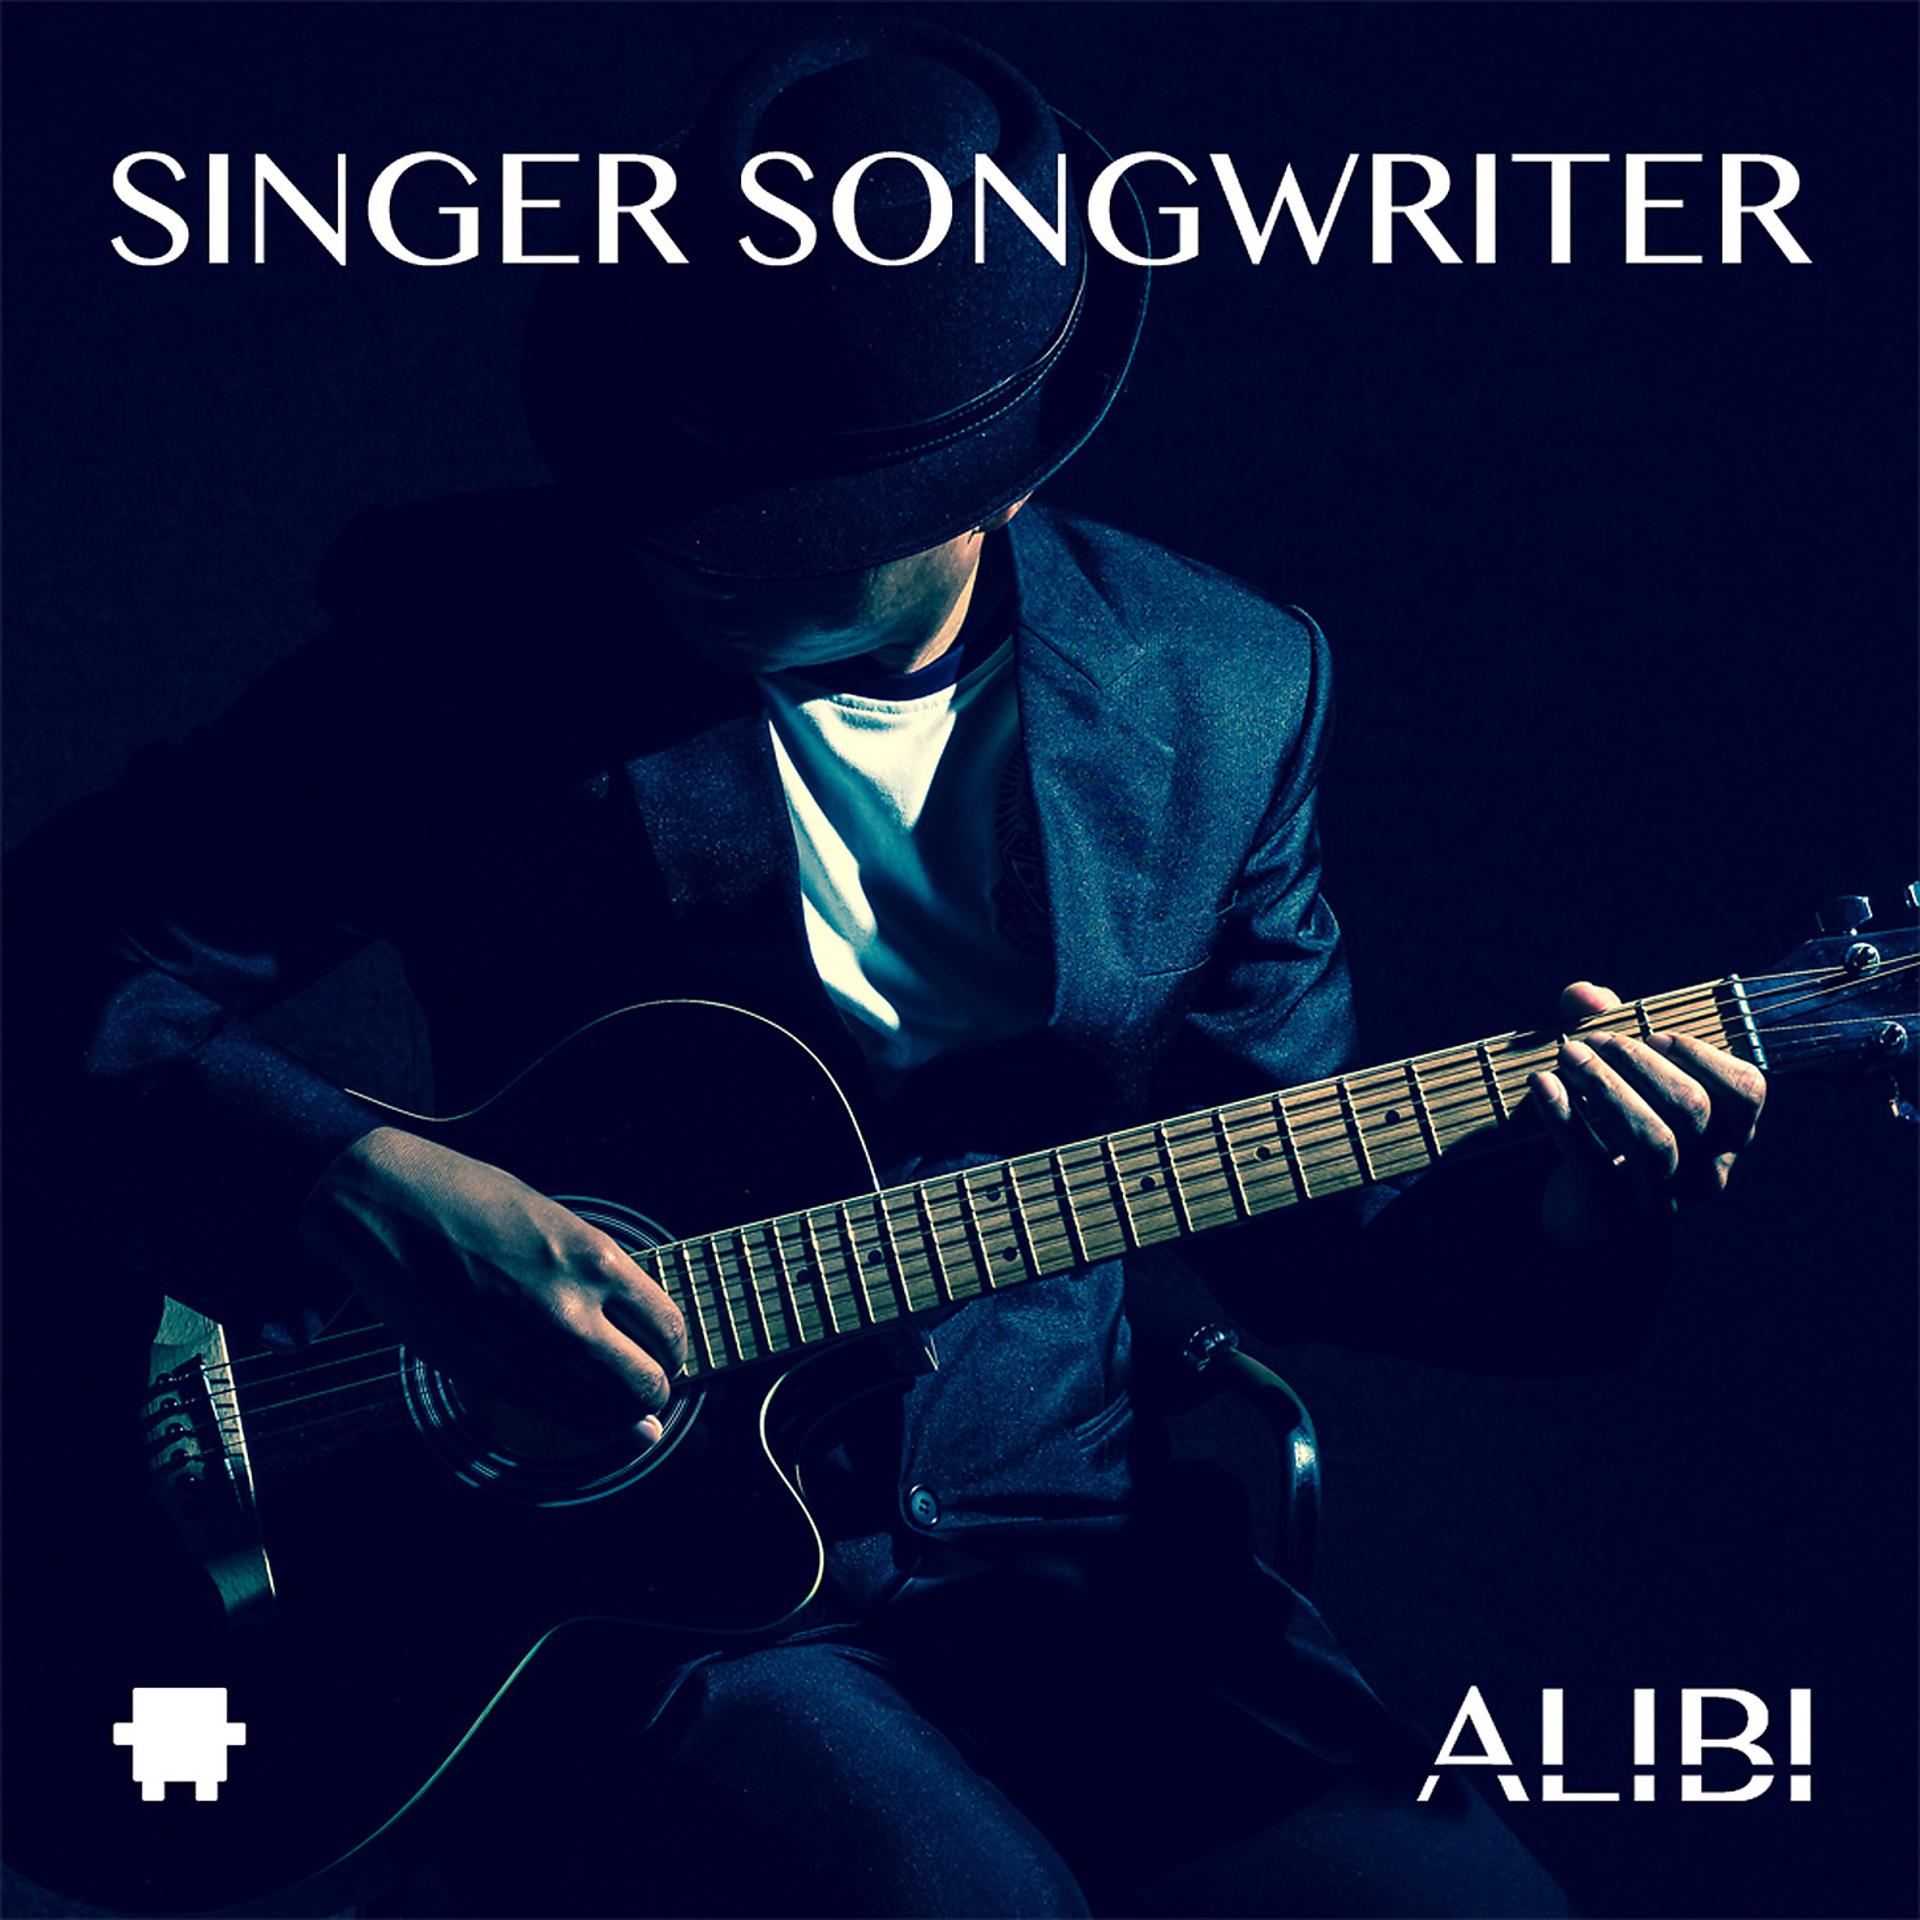 Alibi 1. Alibi Music. Singer songwriter. 2010. Alibi Music. Alibi Music фото. Hydric Alibi Music.